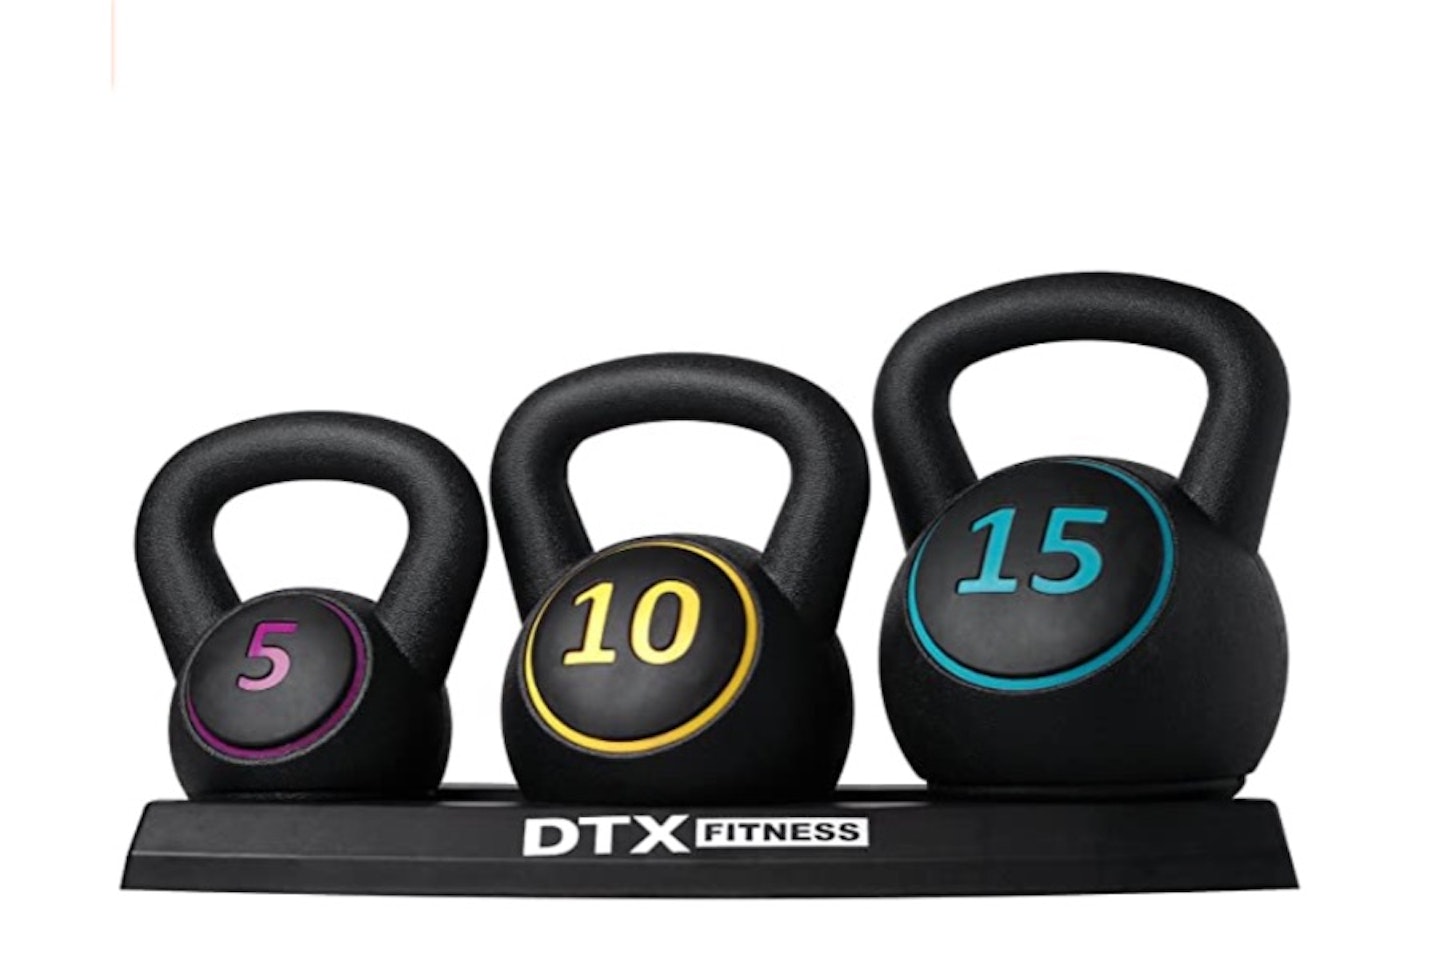 DTX Fitness Kettlebell Weights Set - 5lb (2.3 kg), 10lb (4.5 kg) & 15lb (6.8 kg) Kettlebells & Tray